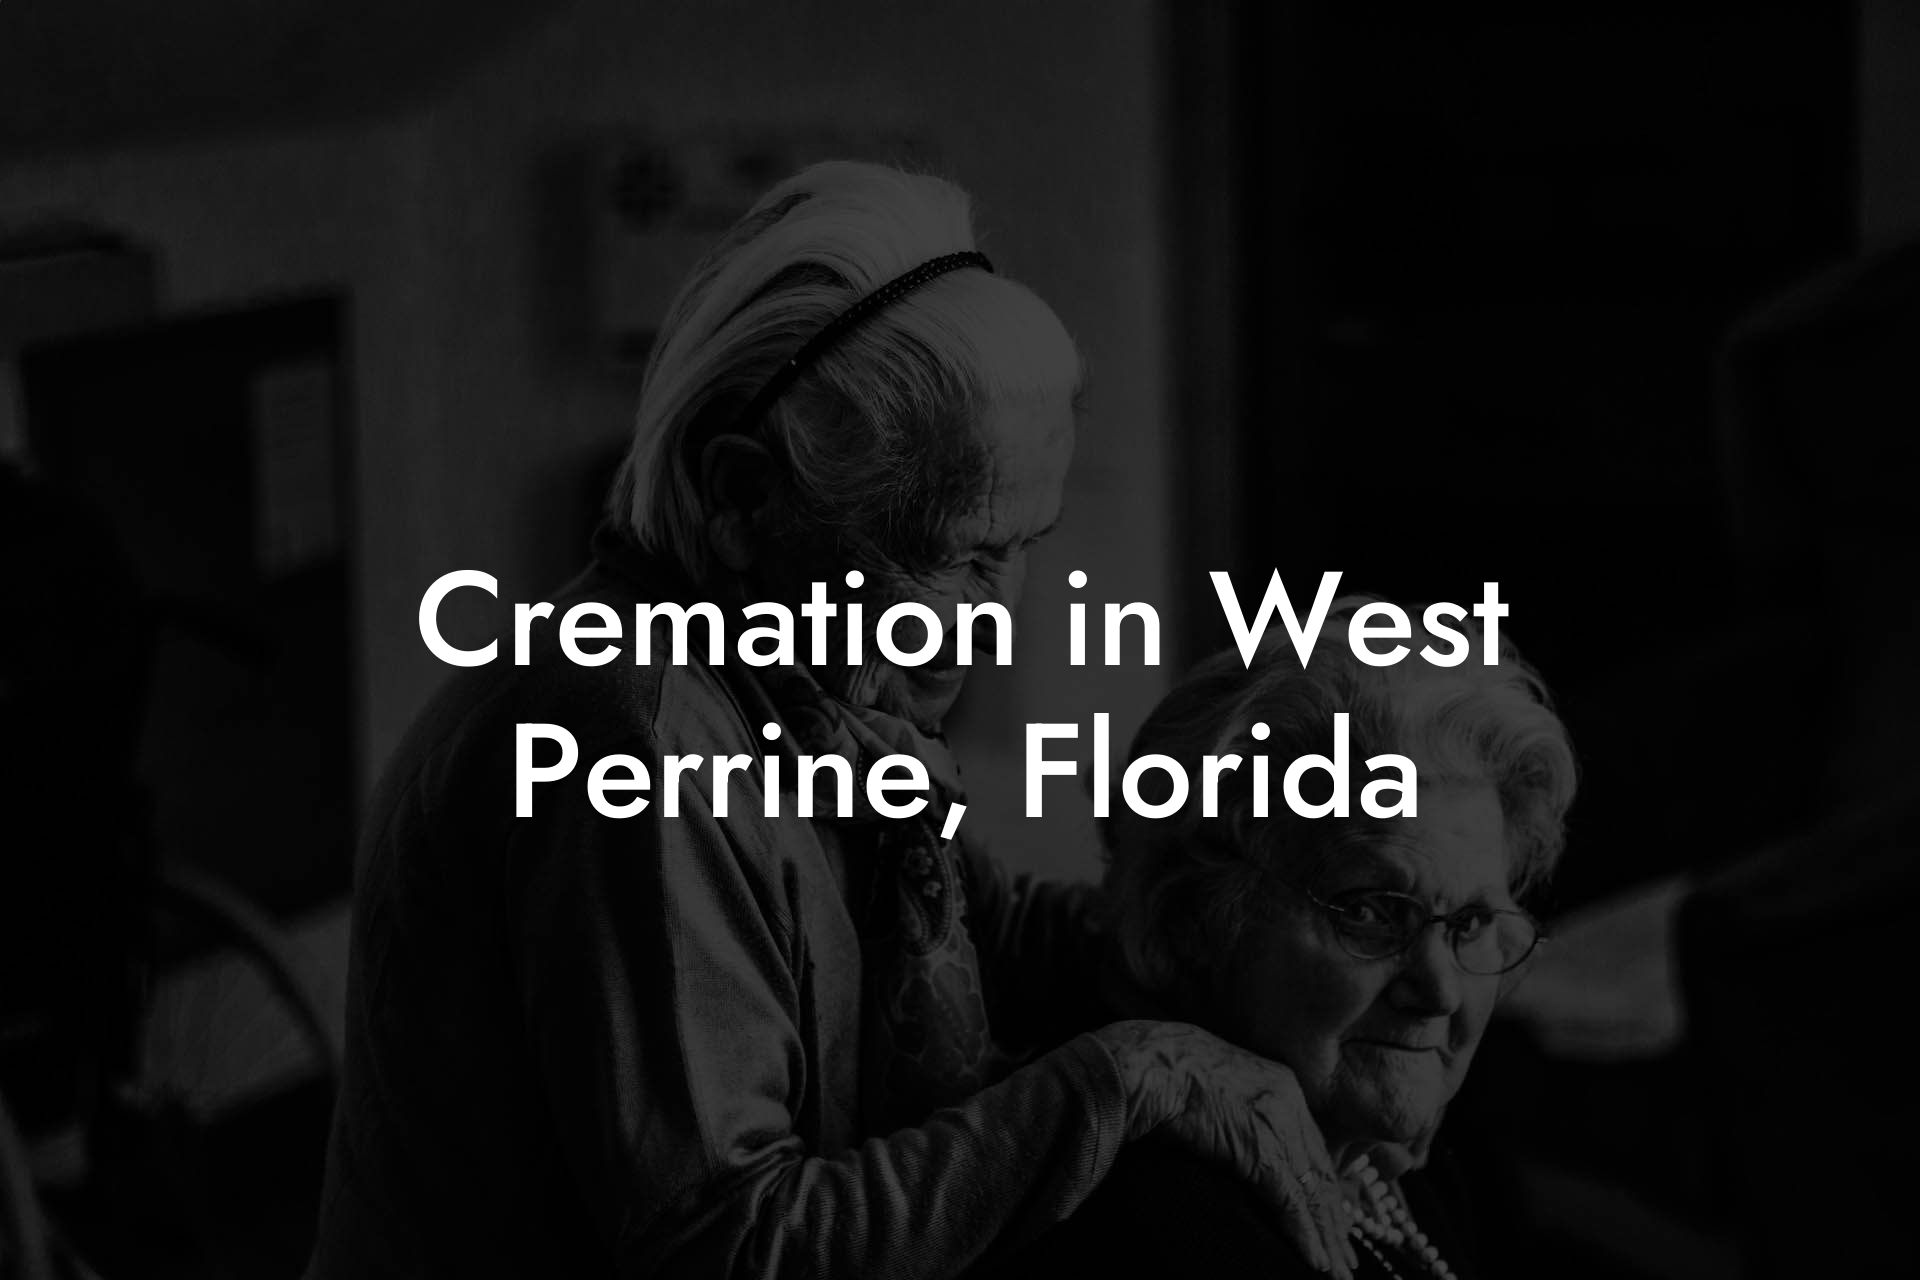 Cremation in West Perrine, Florida